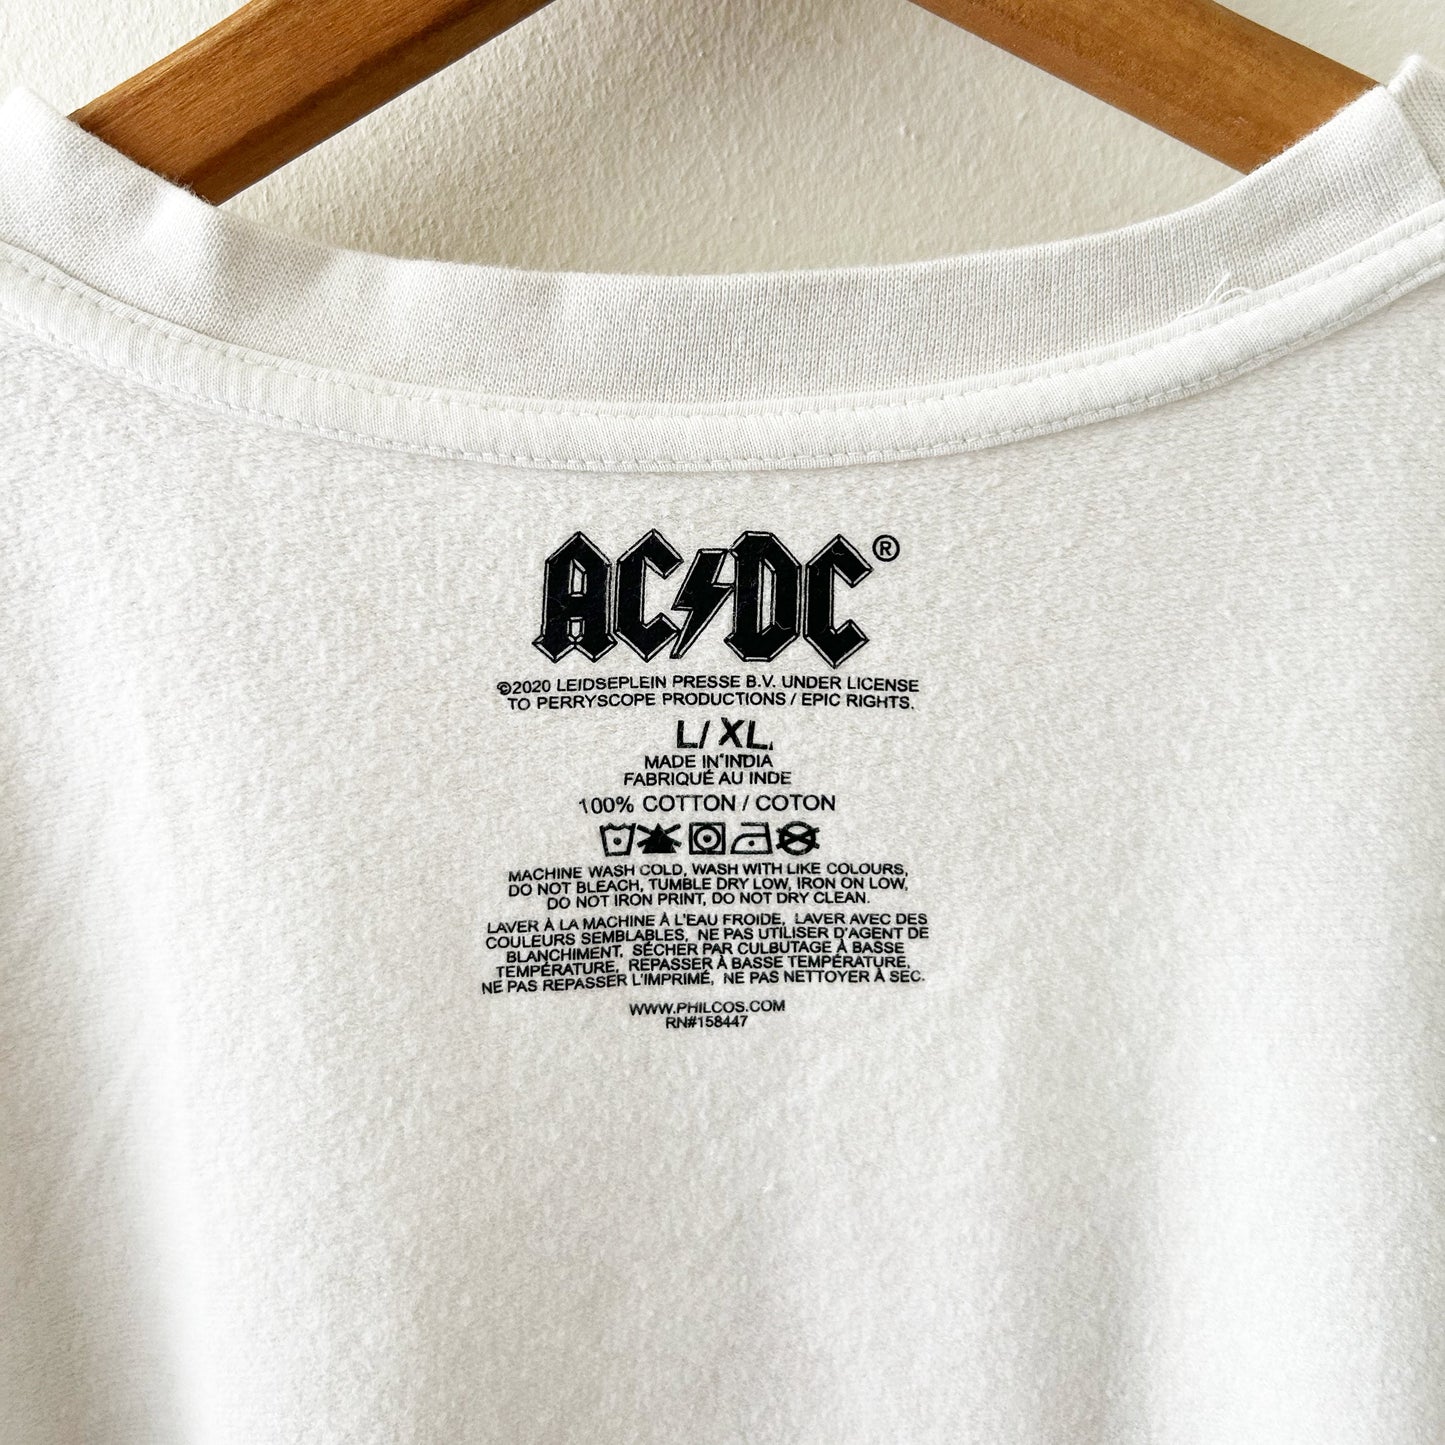 AC/DC tee